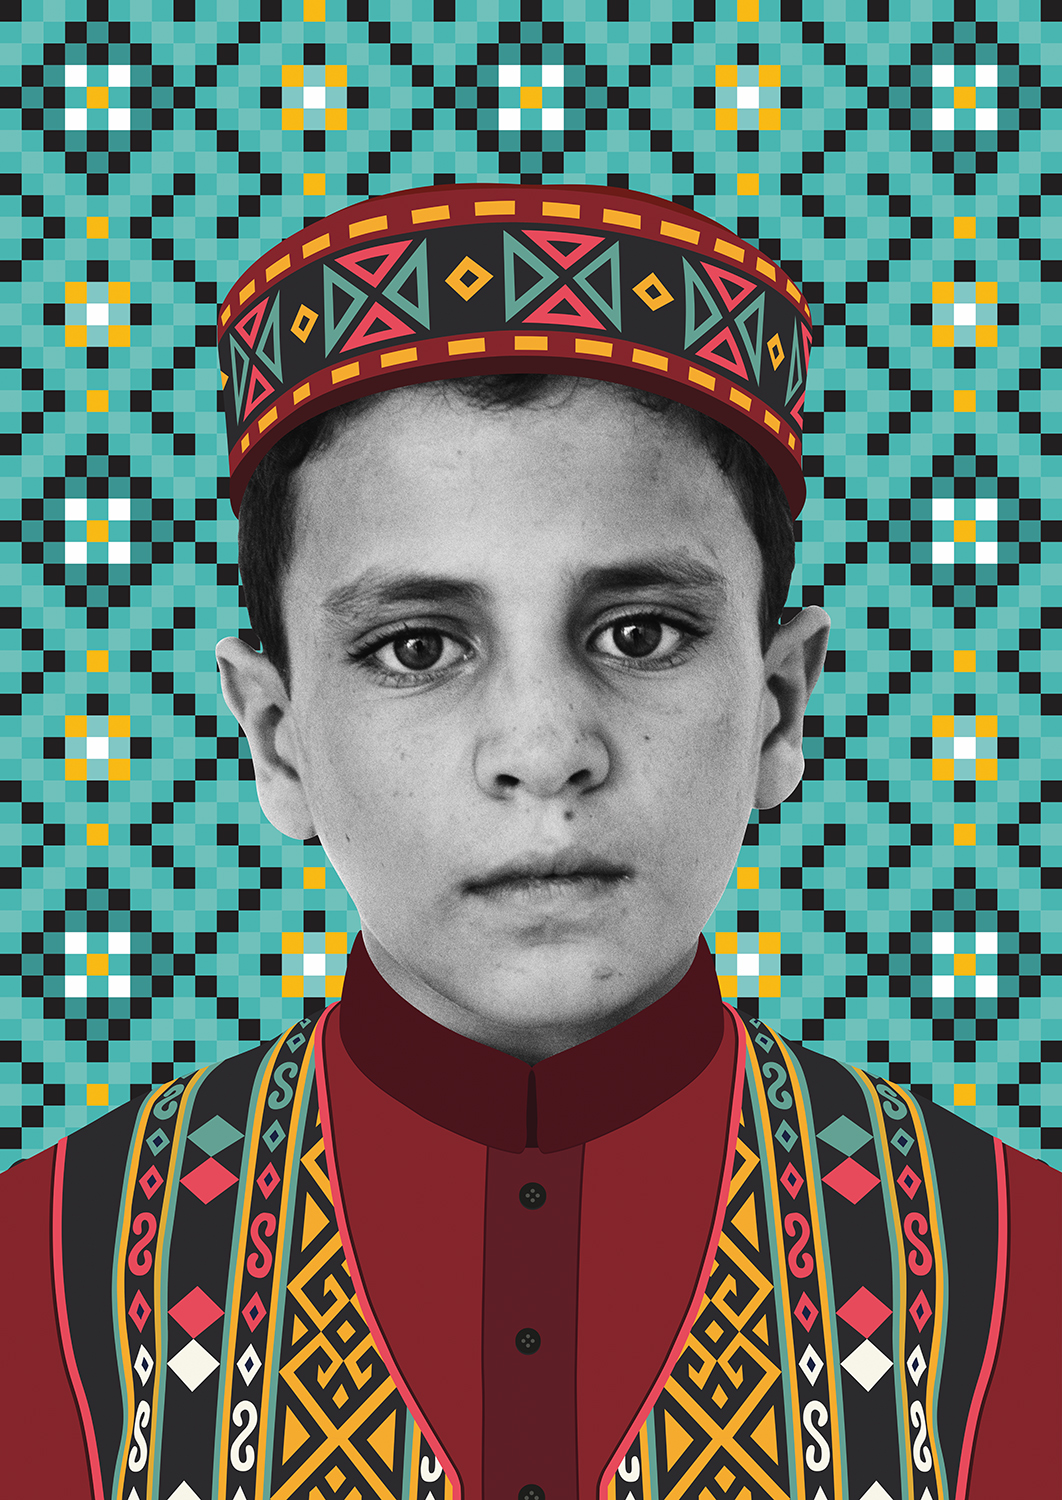 portrait of a young boy